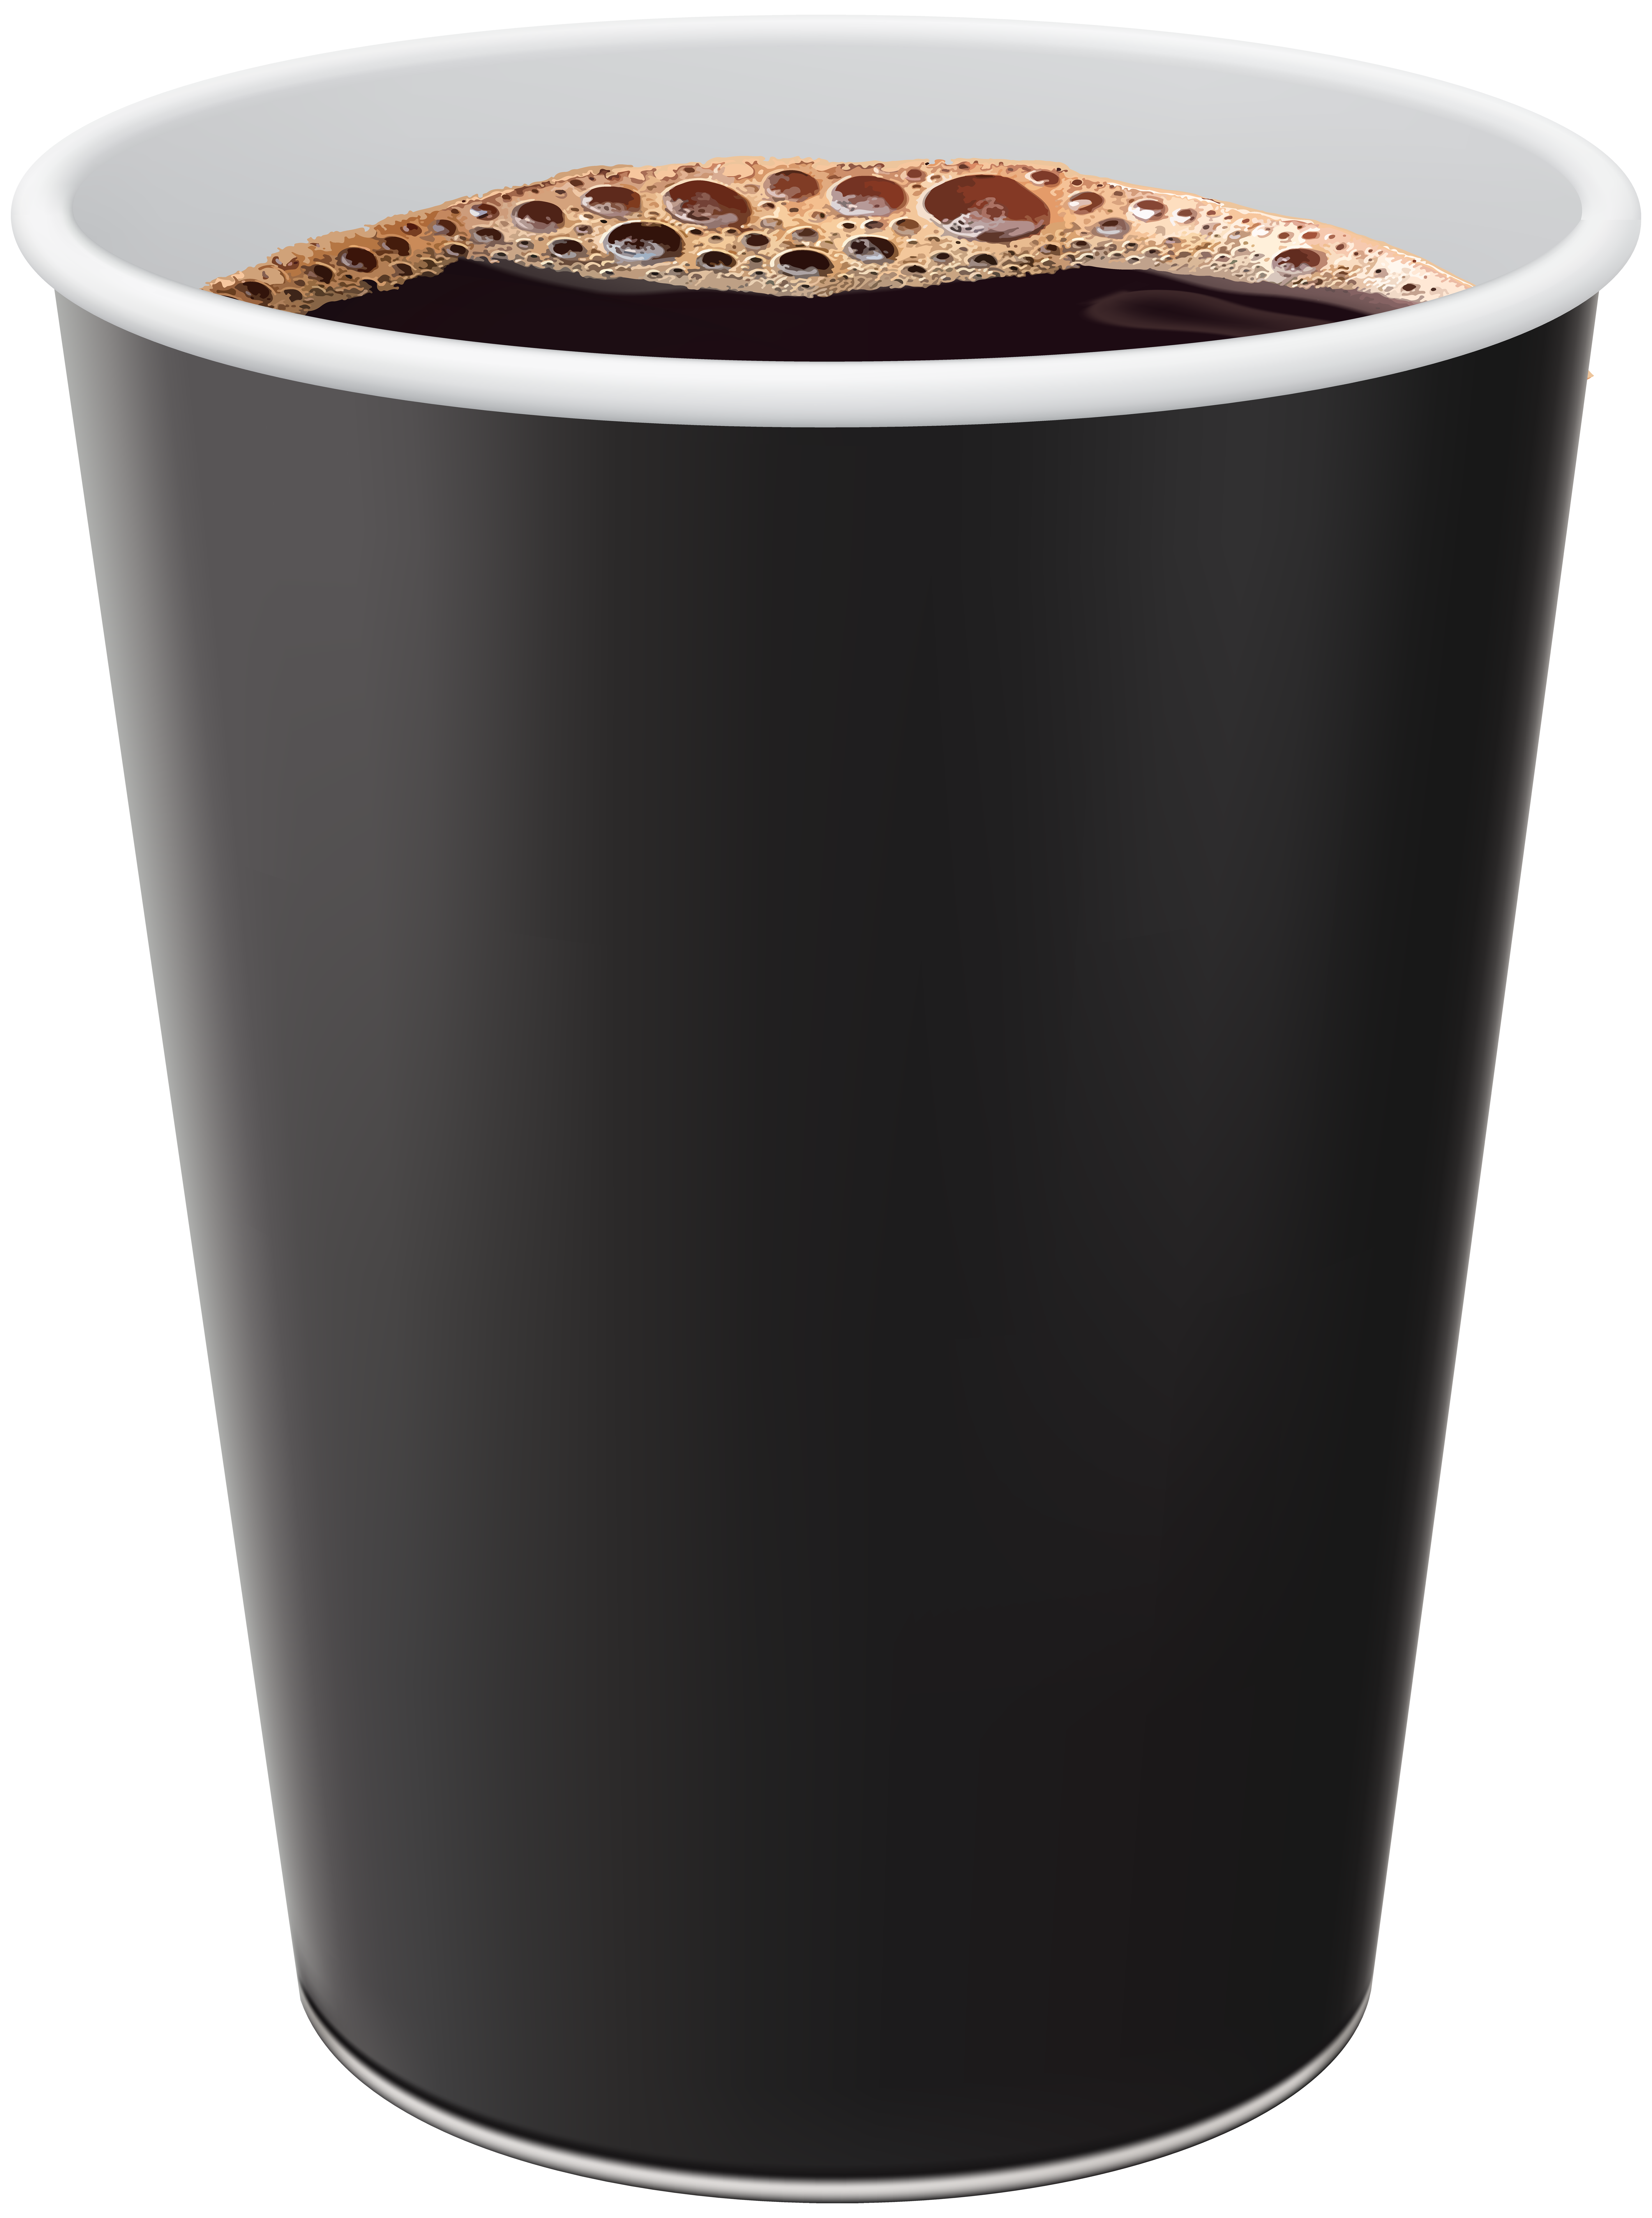 Takeaway Coffee Cup PNG Clip Art.